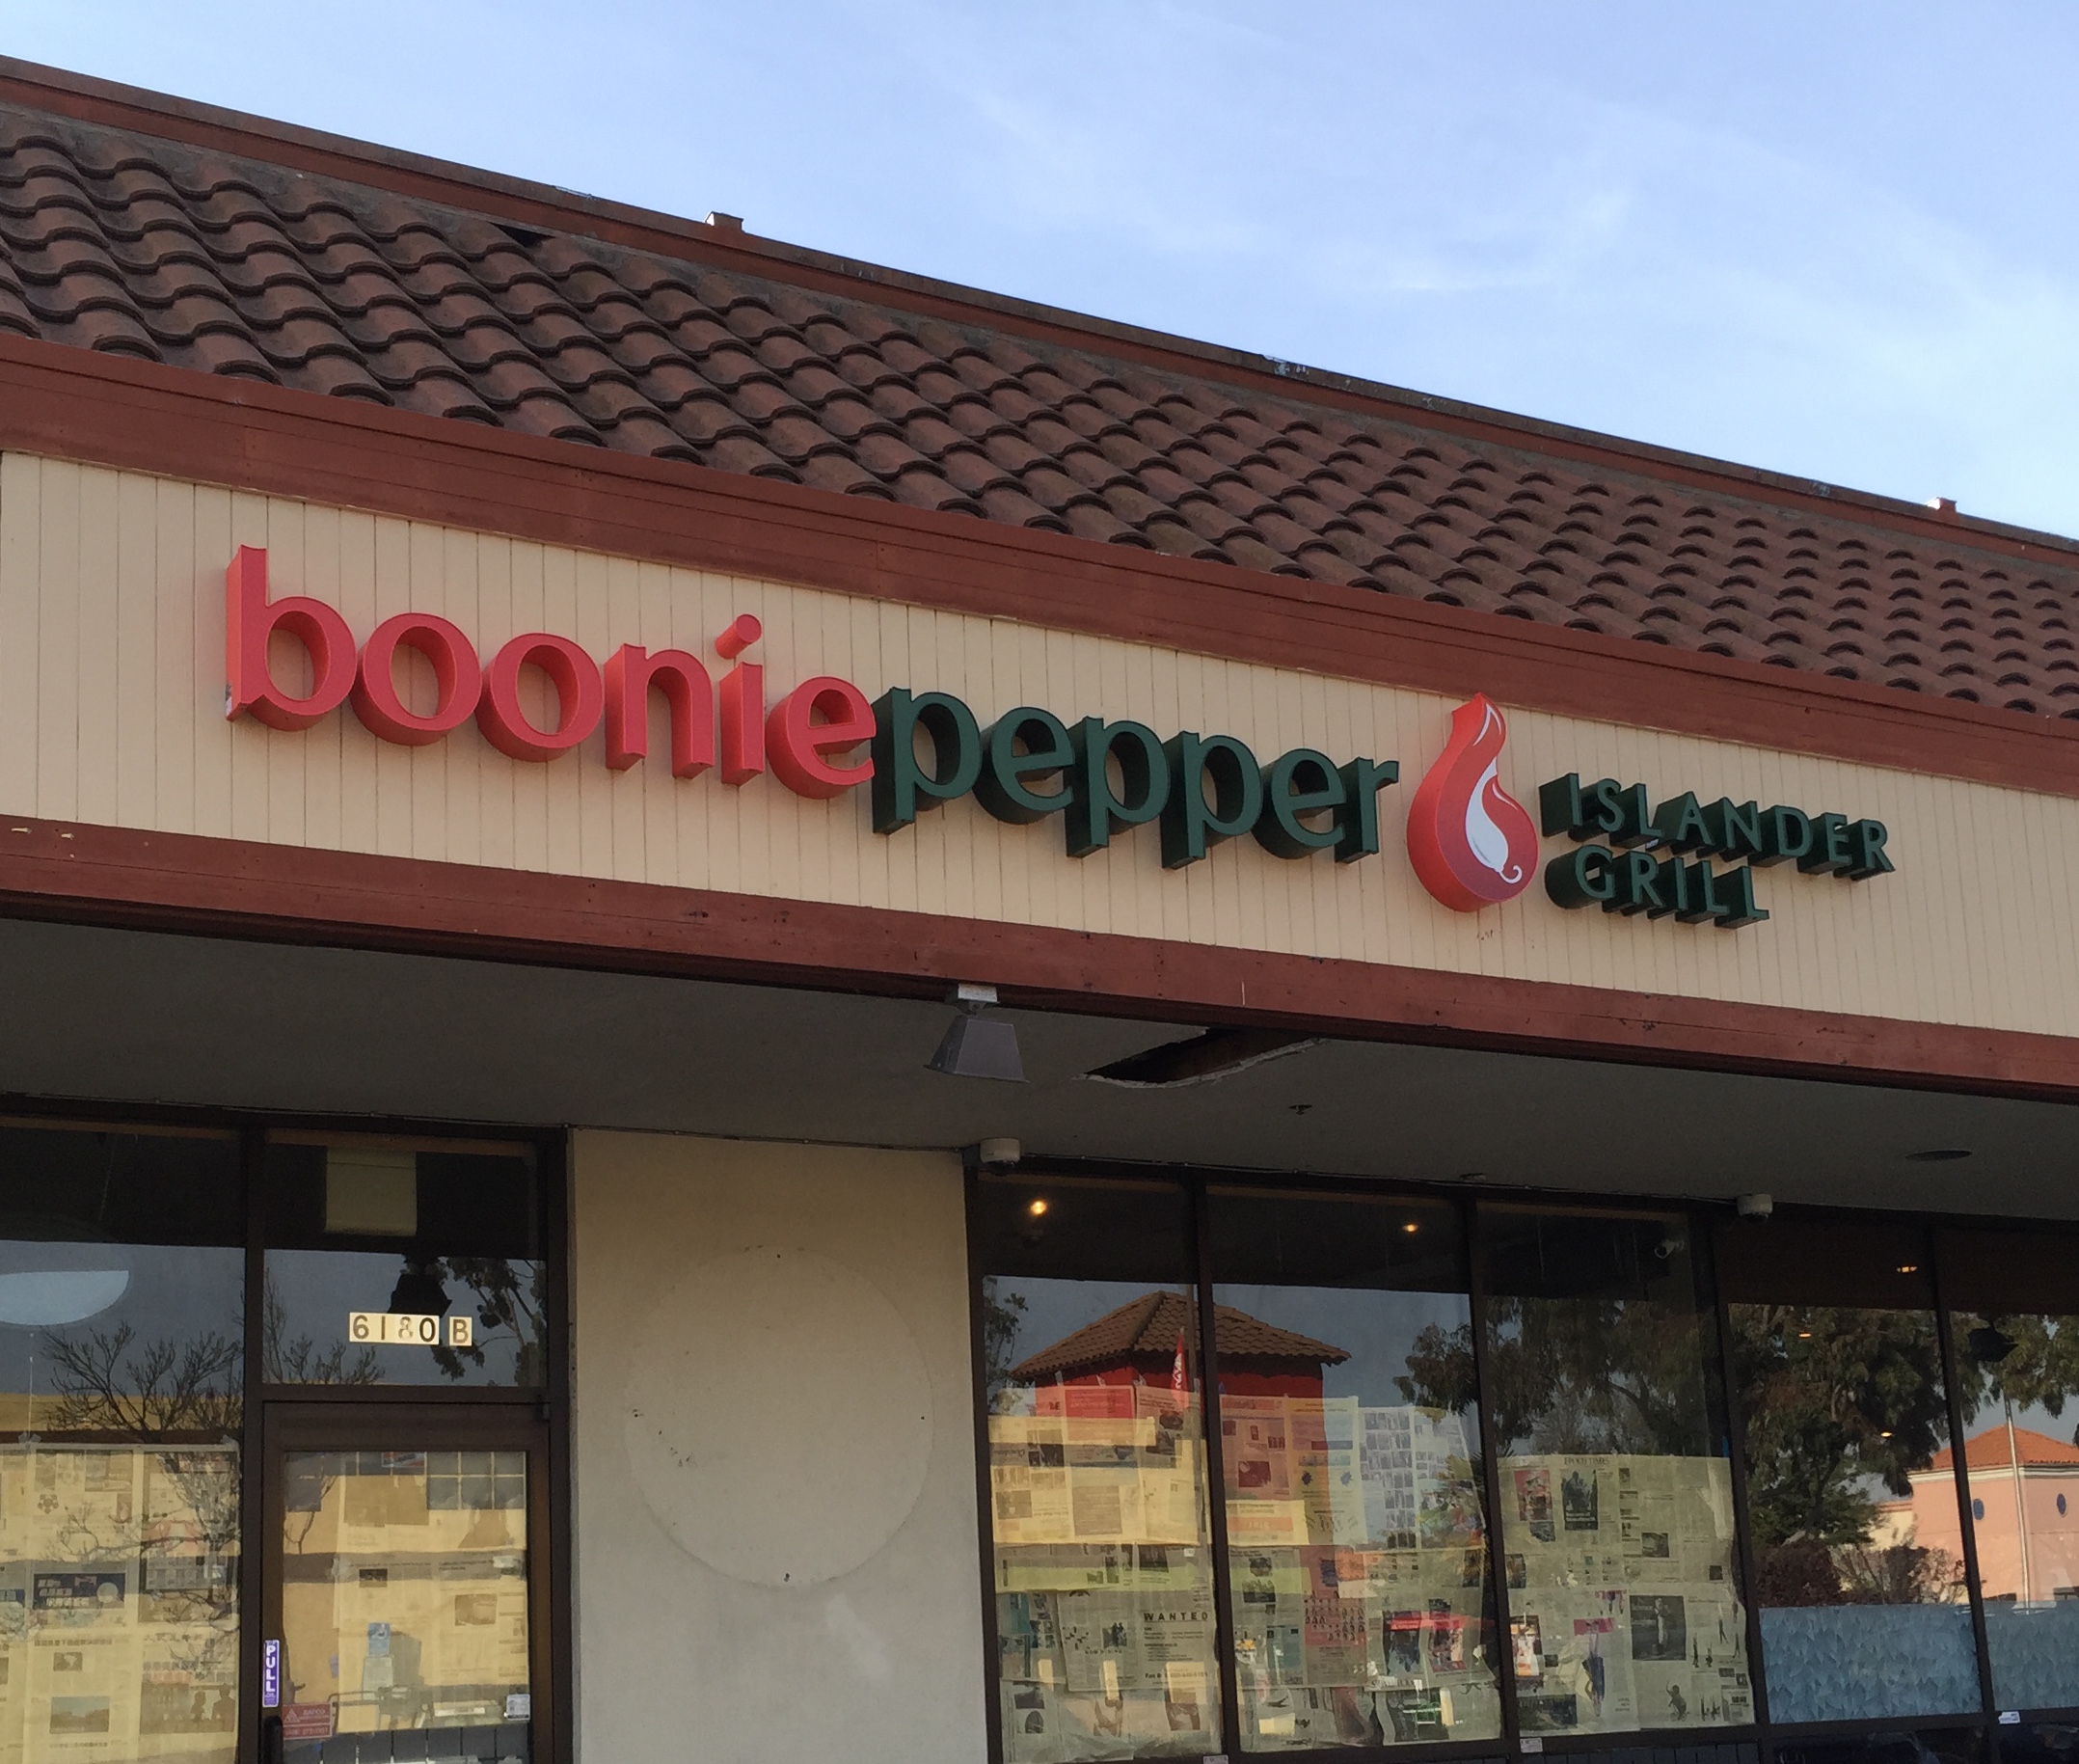 Boonie Pepper Islander Grill – Newark, CA